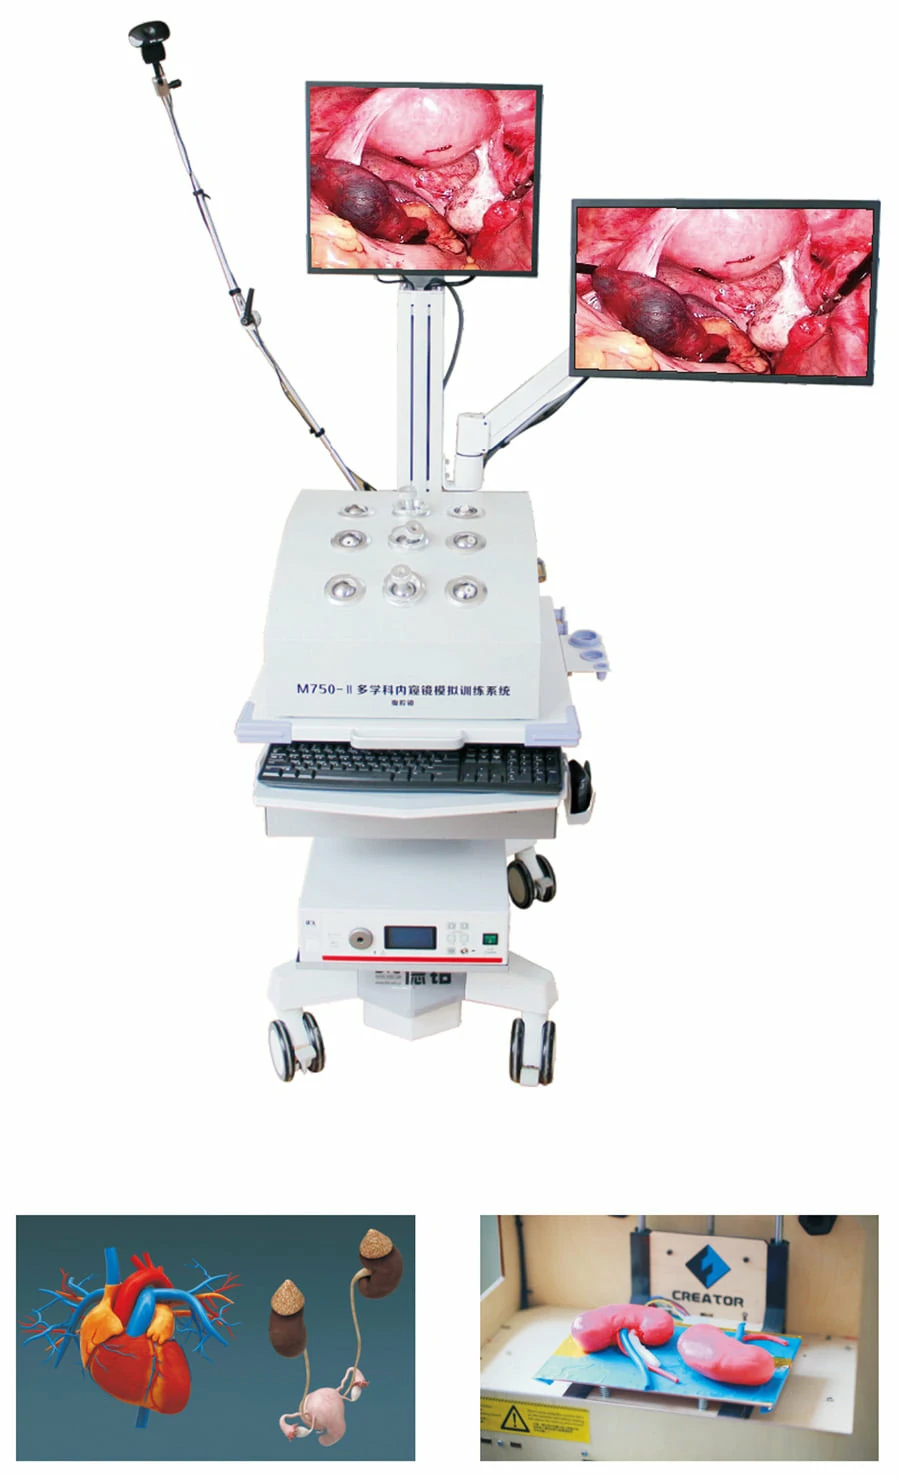 CITEC™ M’750-II Endoscopy Training Simulation System